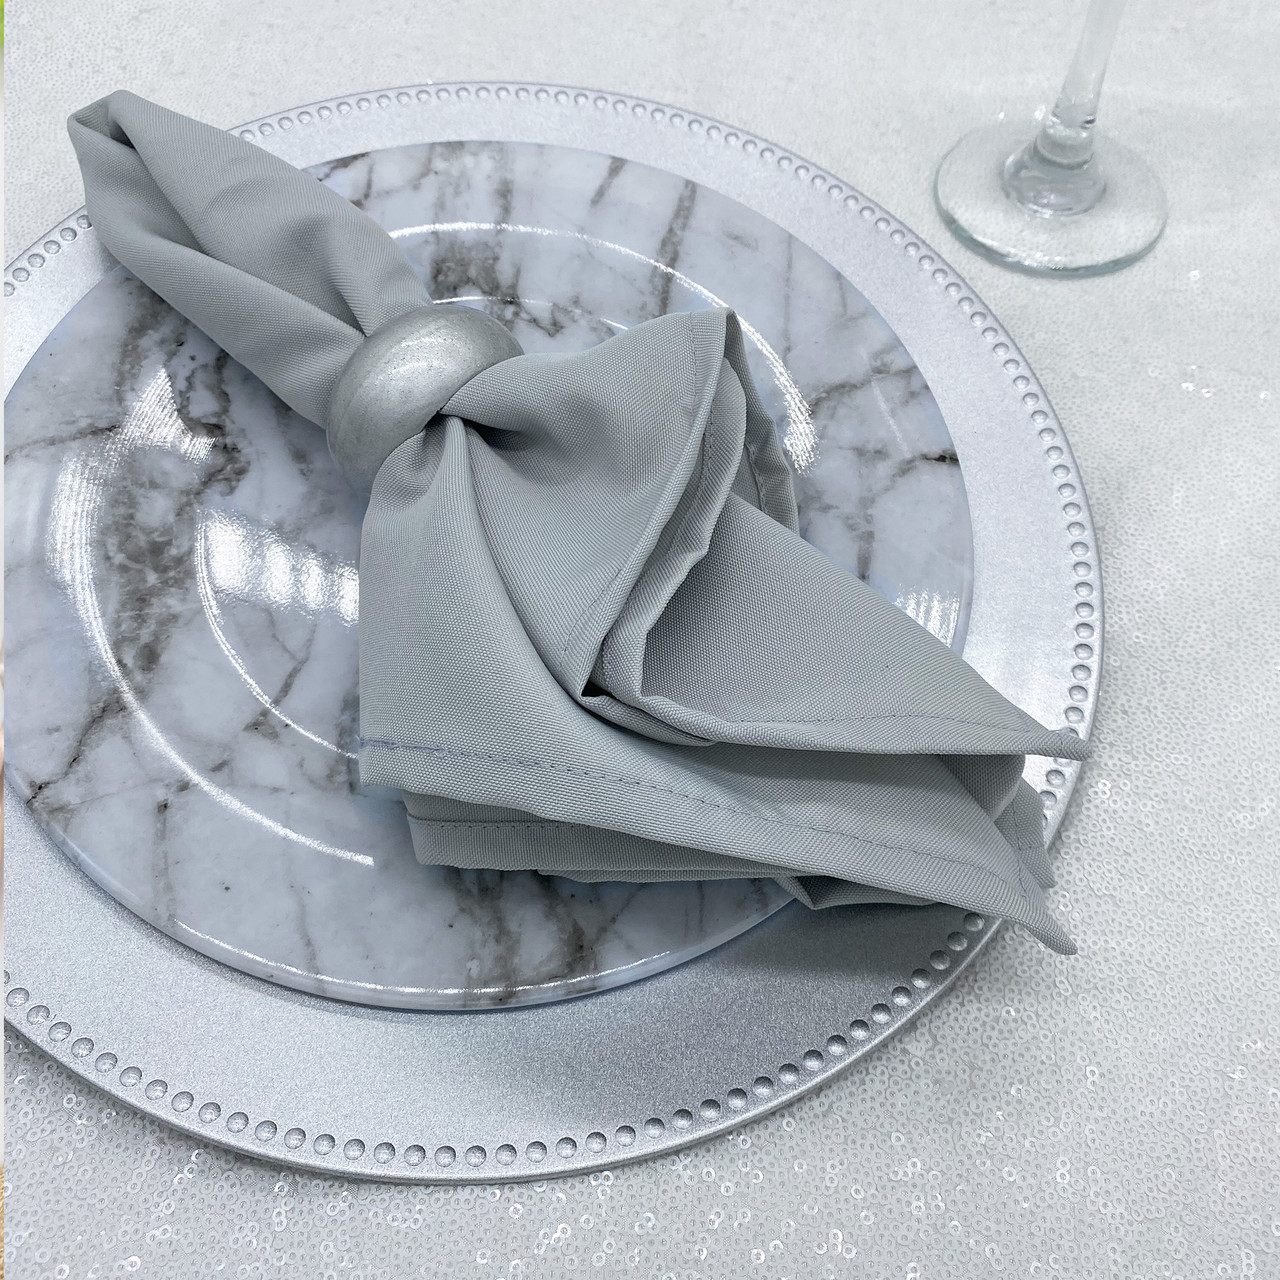 Surmente 20-inch Polyester Cloth Napkins Linen Dinner Napkins - Set of 12 for Weddings, Banquets, or Restaurants (1-Dozen) (Silver)